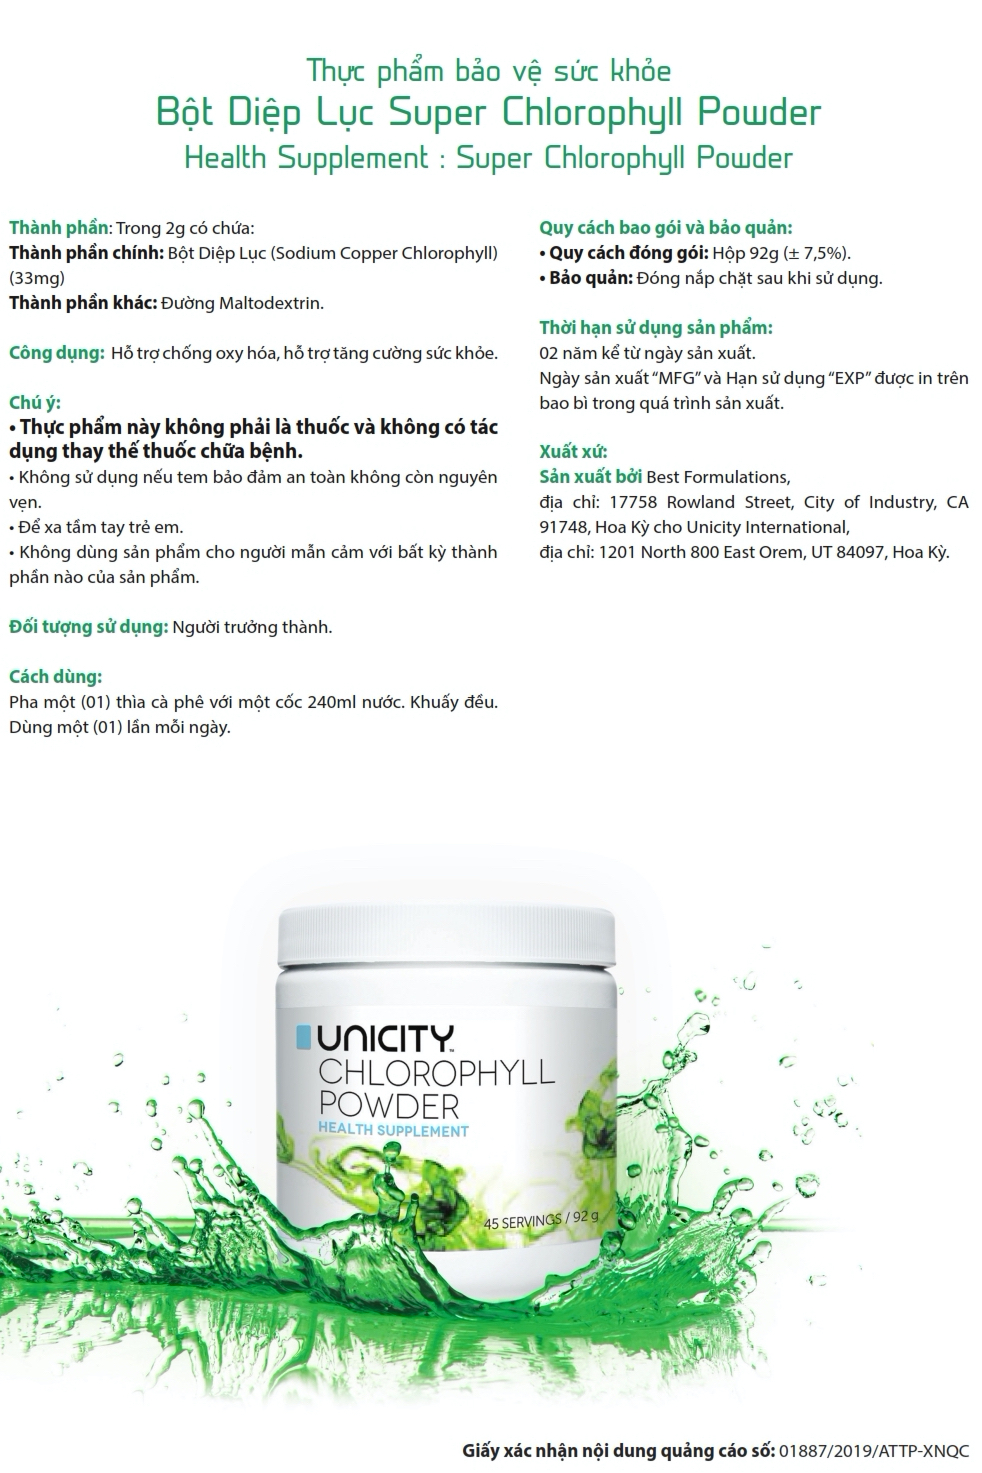 Bot diep luc Unicity Super Chlorophyll Powder Uni